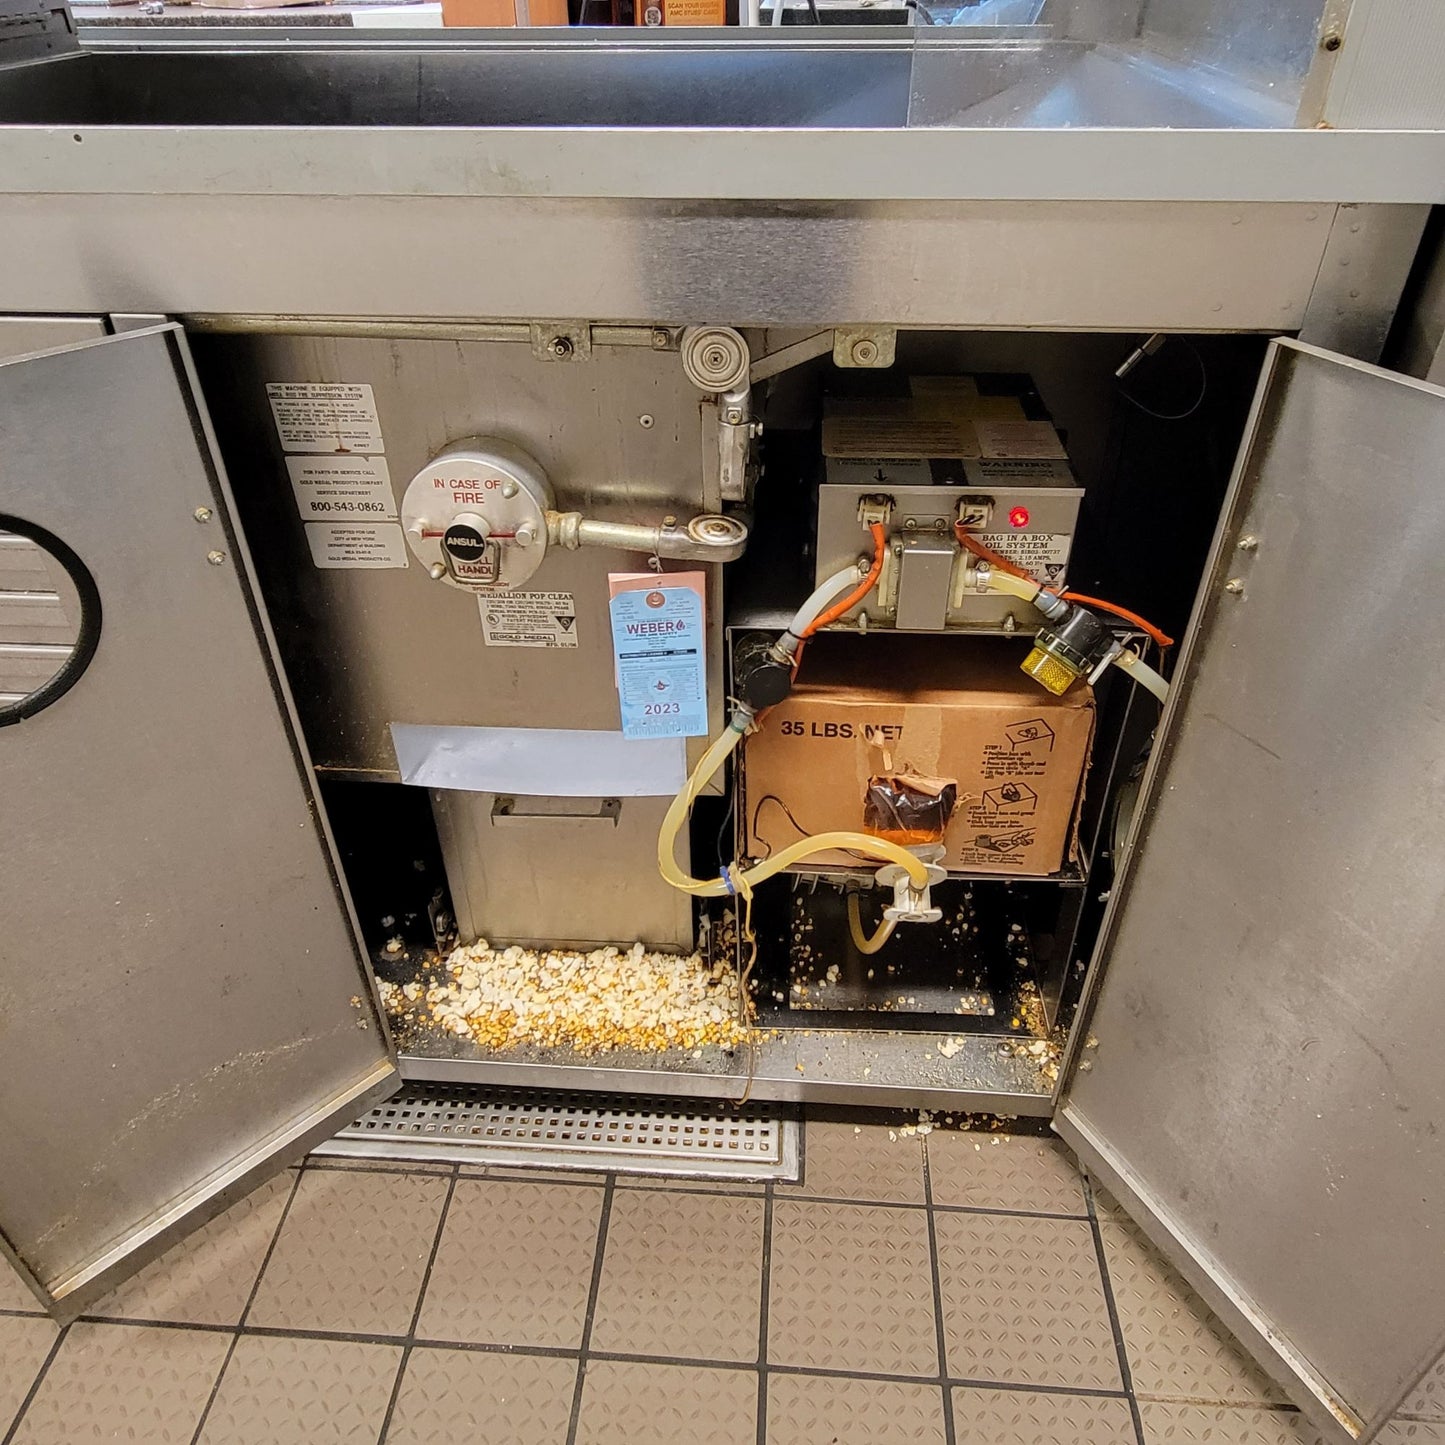 52oz Grand Medallion Commercial Popcorn Machine